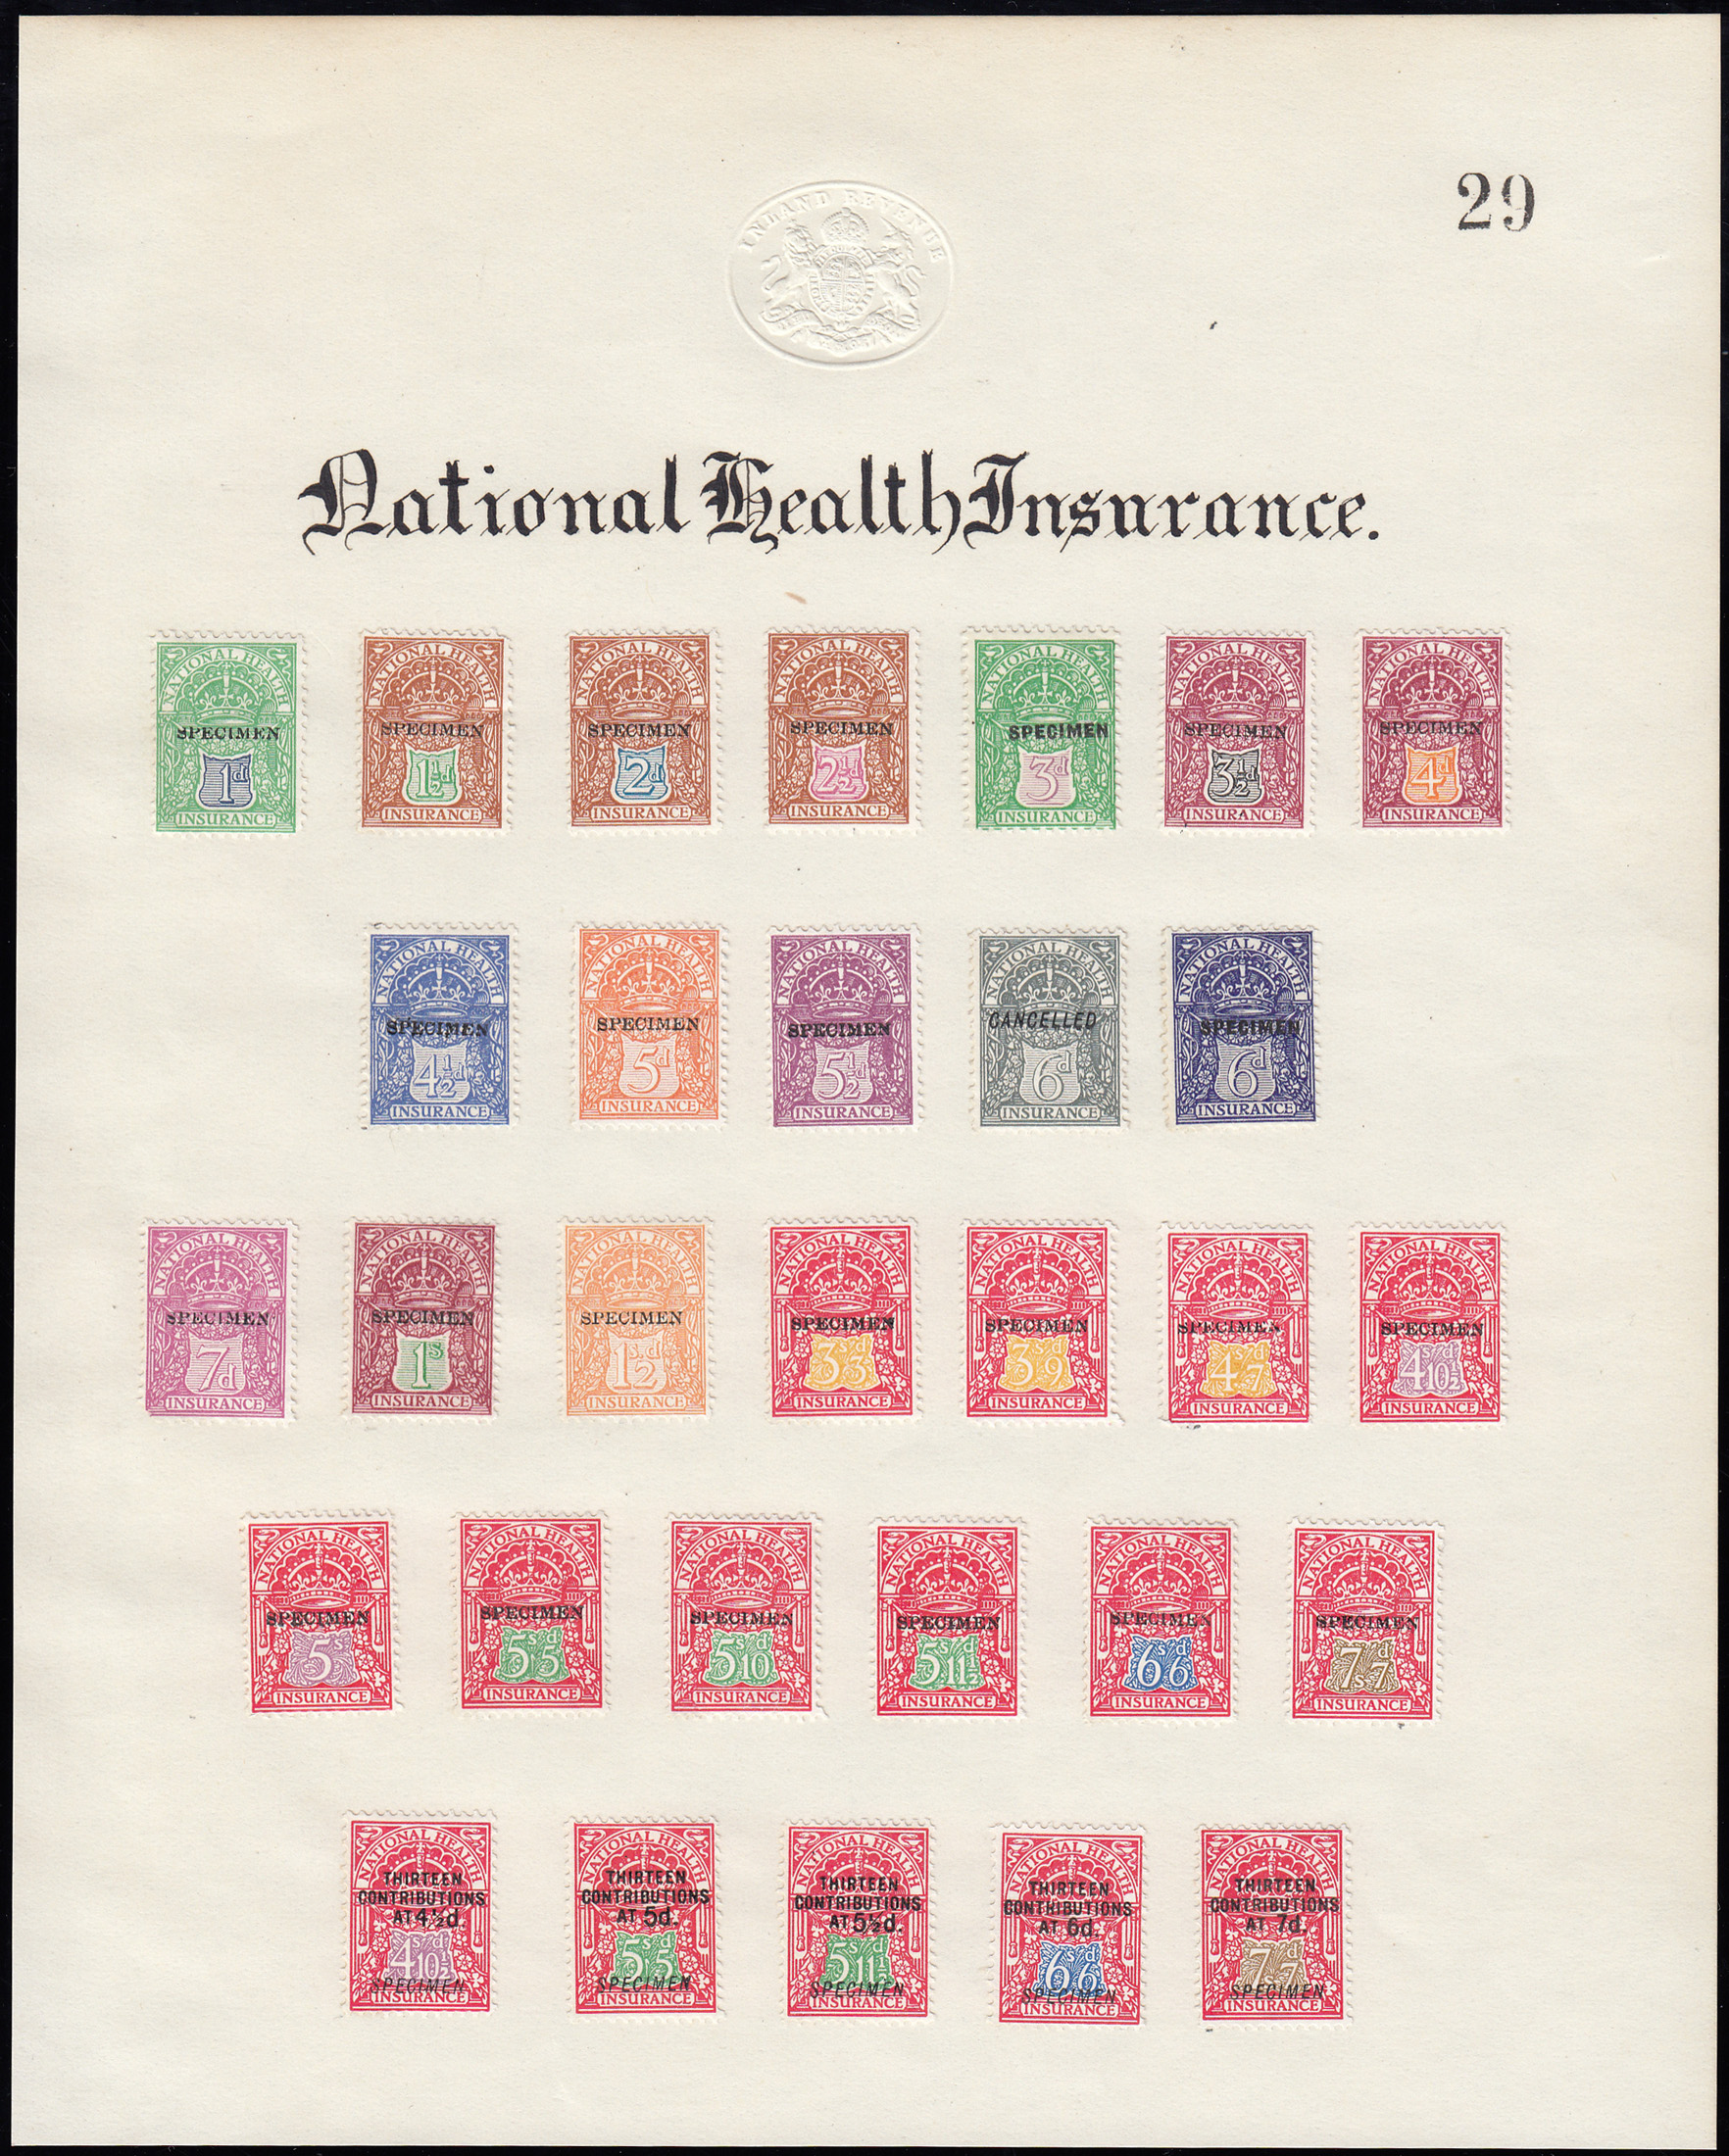 c.1900 National Health Insurance.